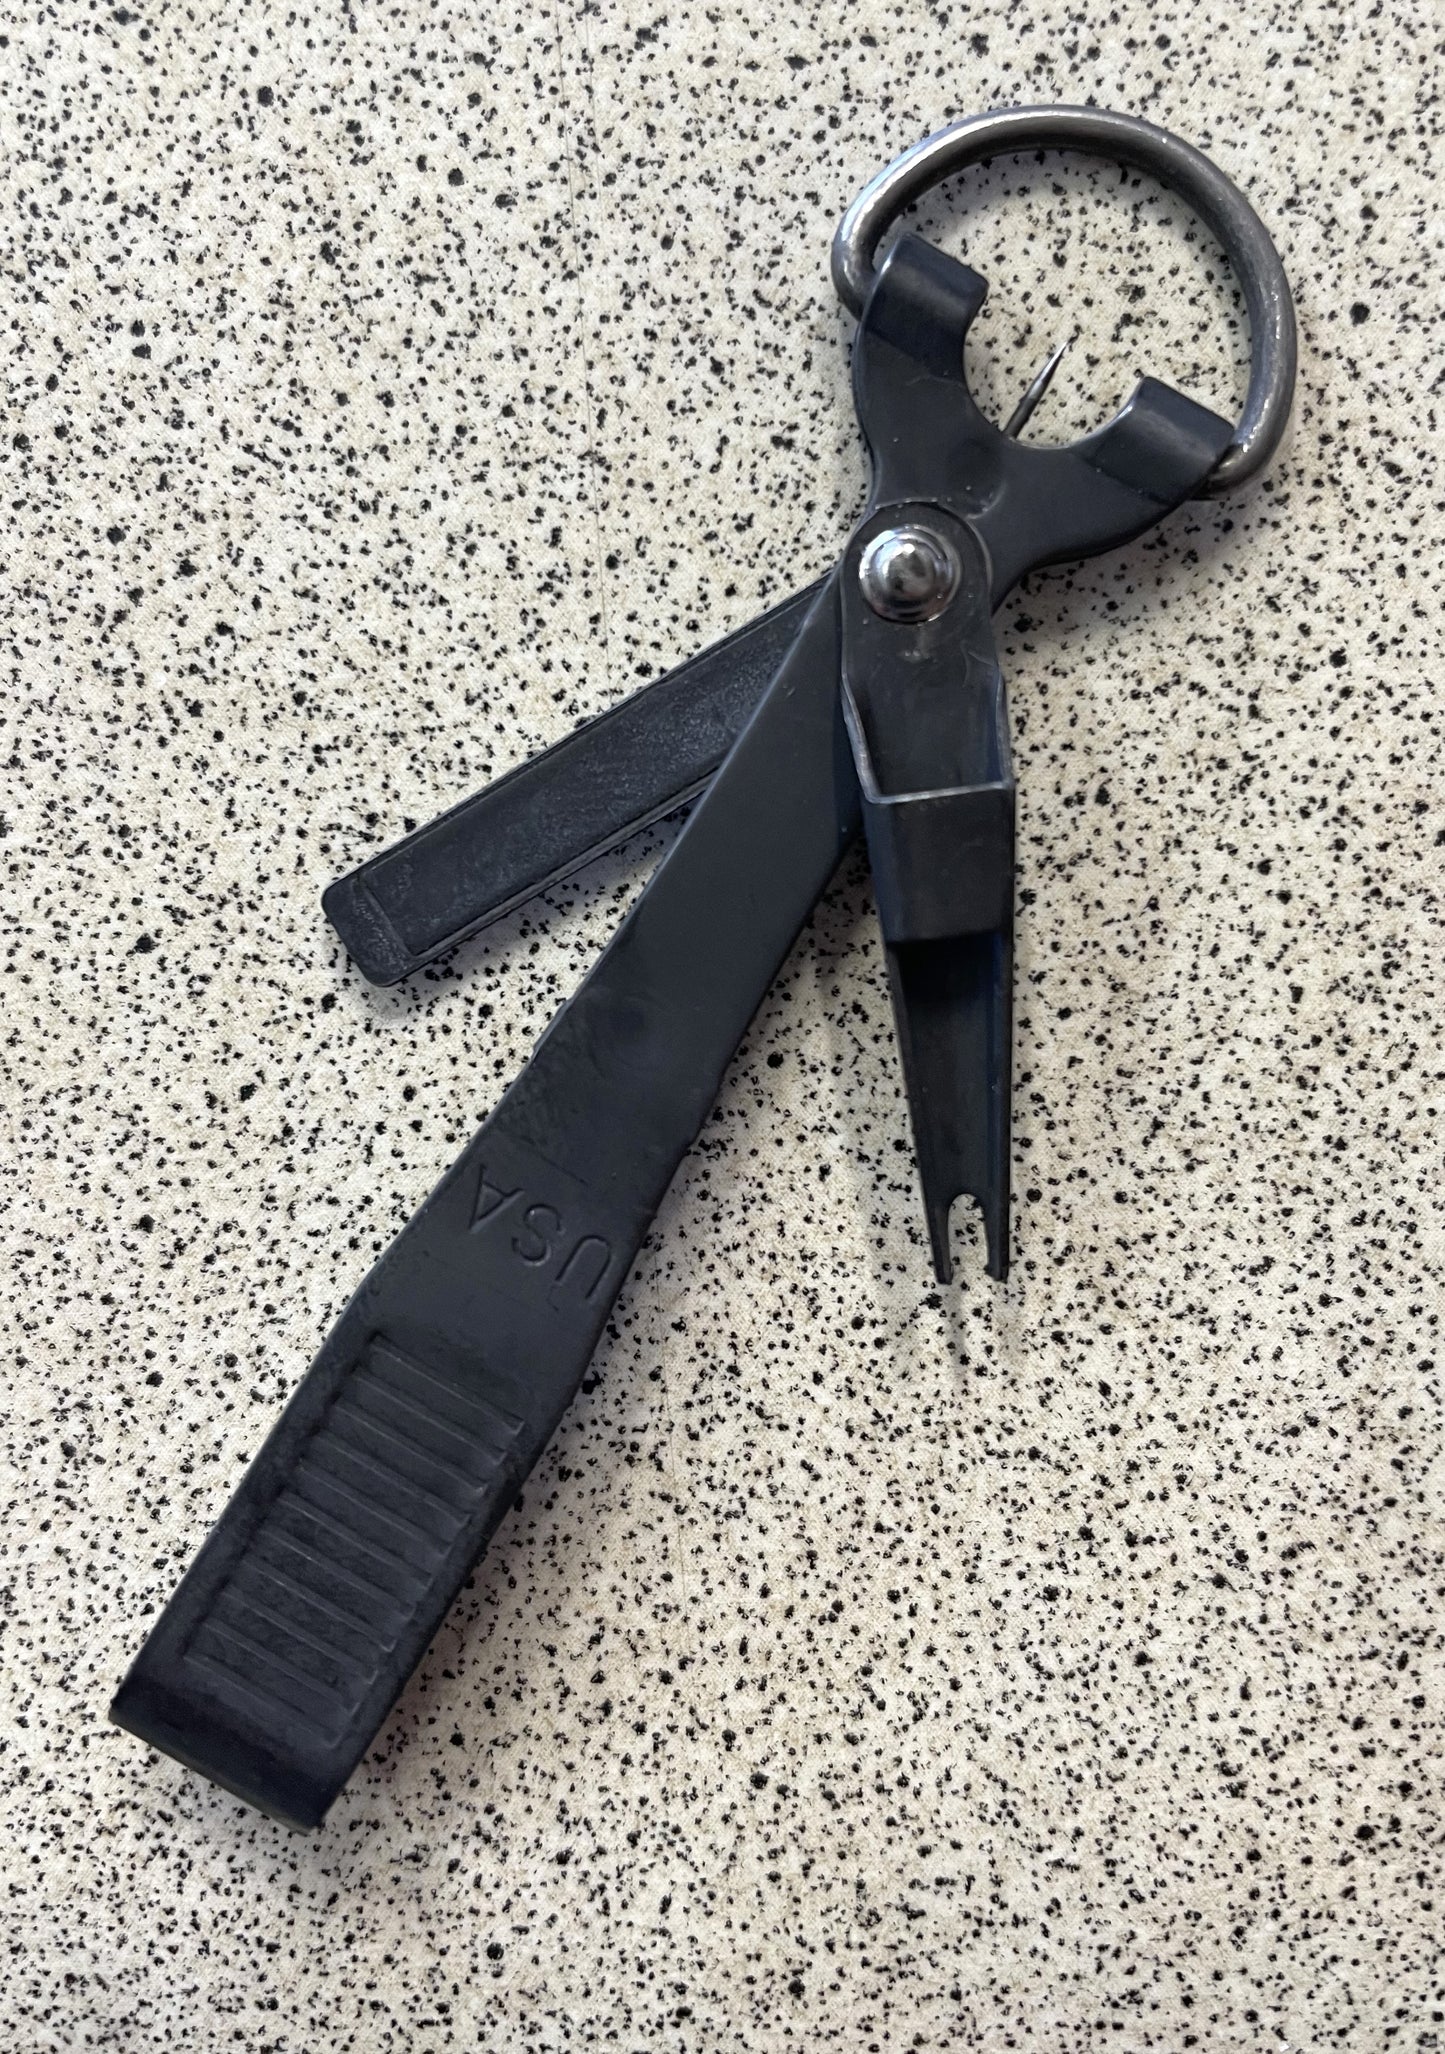 Tie-Fast Knot Tyer Combo Tool - Black